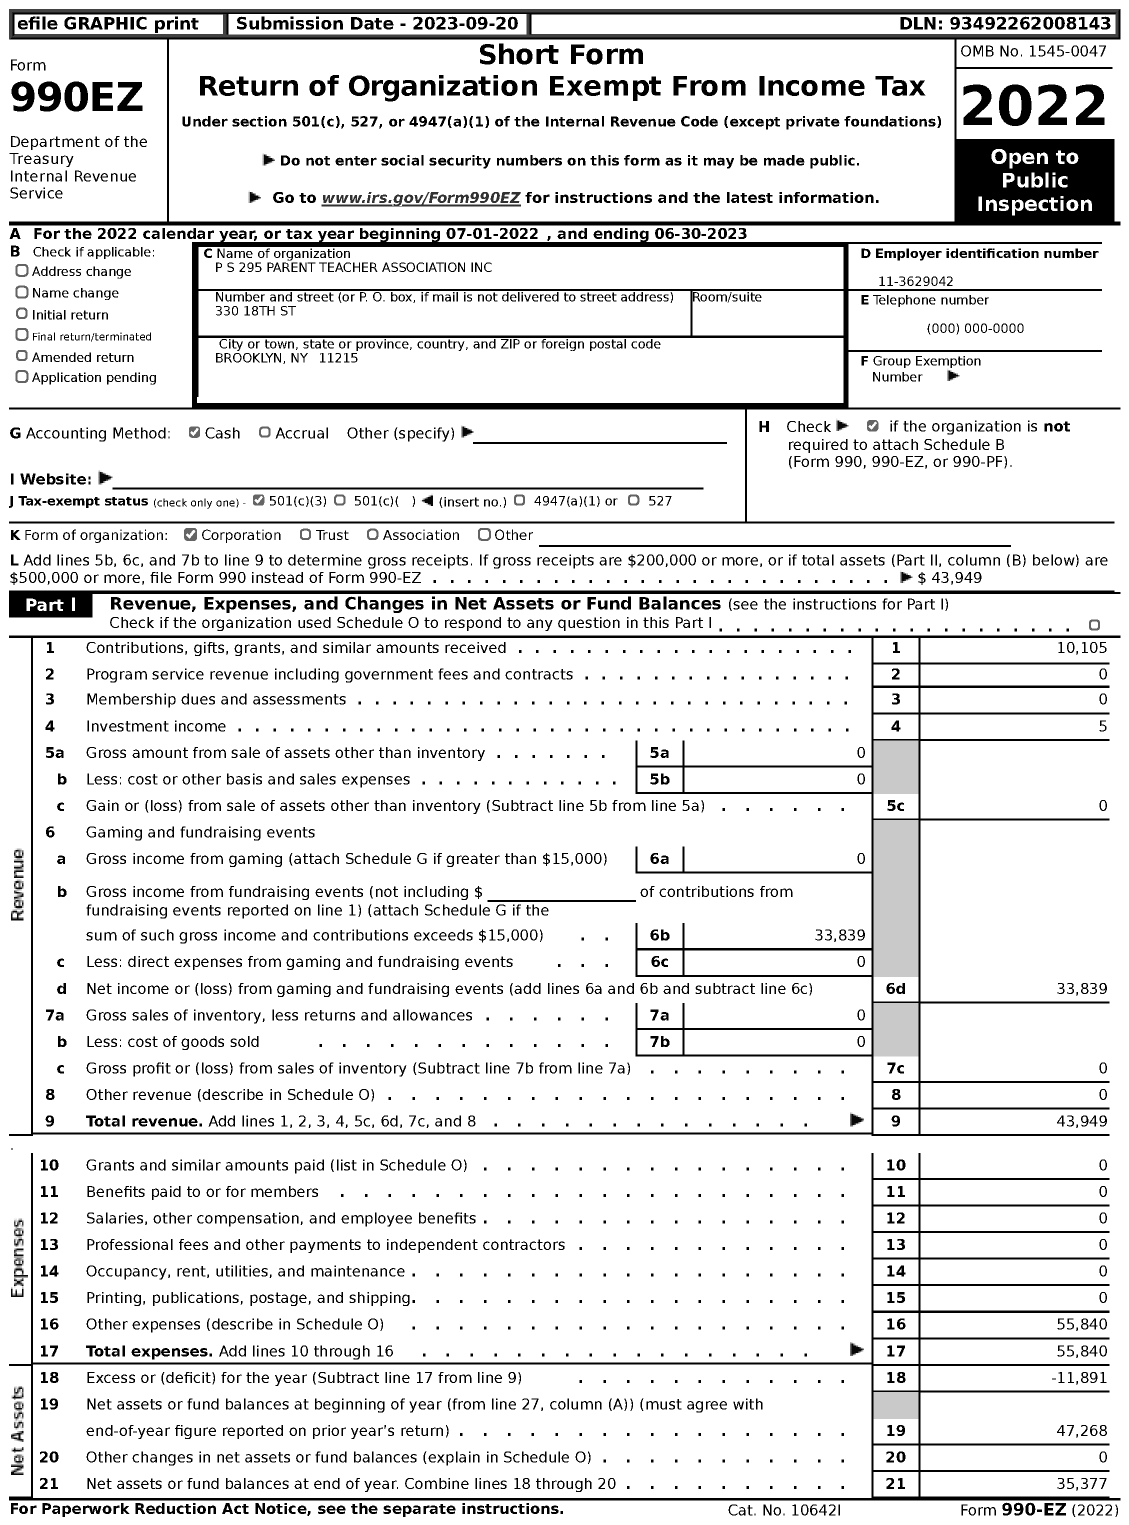 Image of first page of 2022 Form 990EZ for PTA S 295 Parent Teacher Association